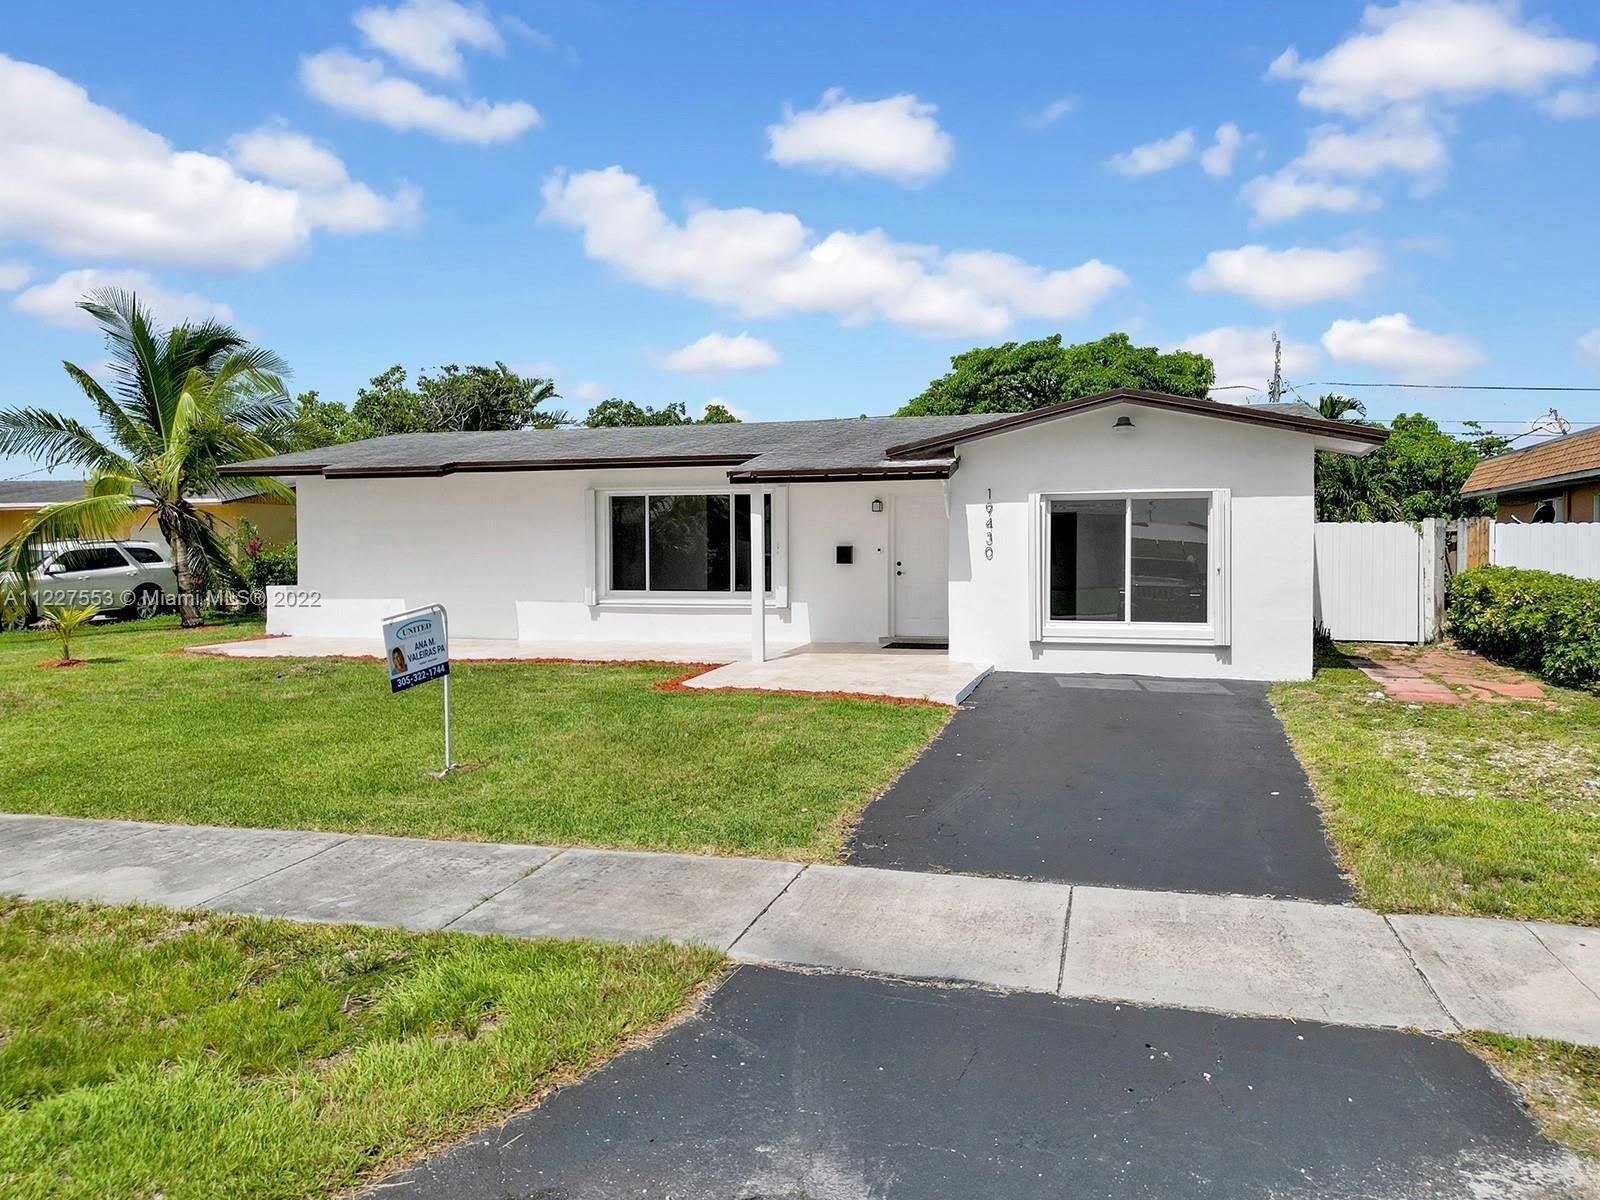 Real estate property located at 19430 117th Ct, Miami-Dade County, Miami, FL